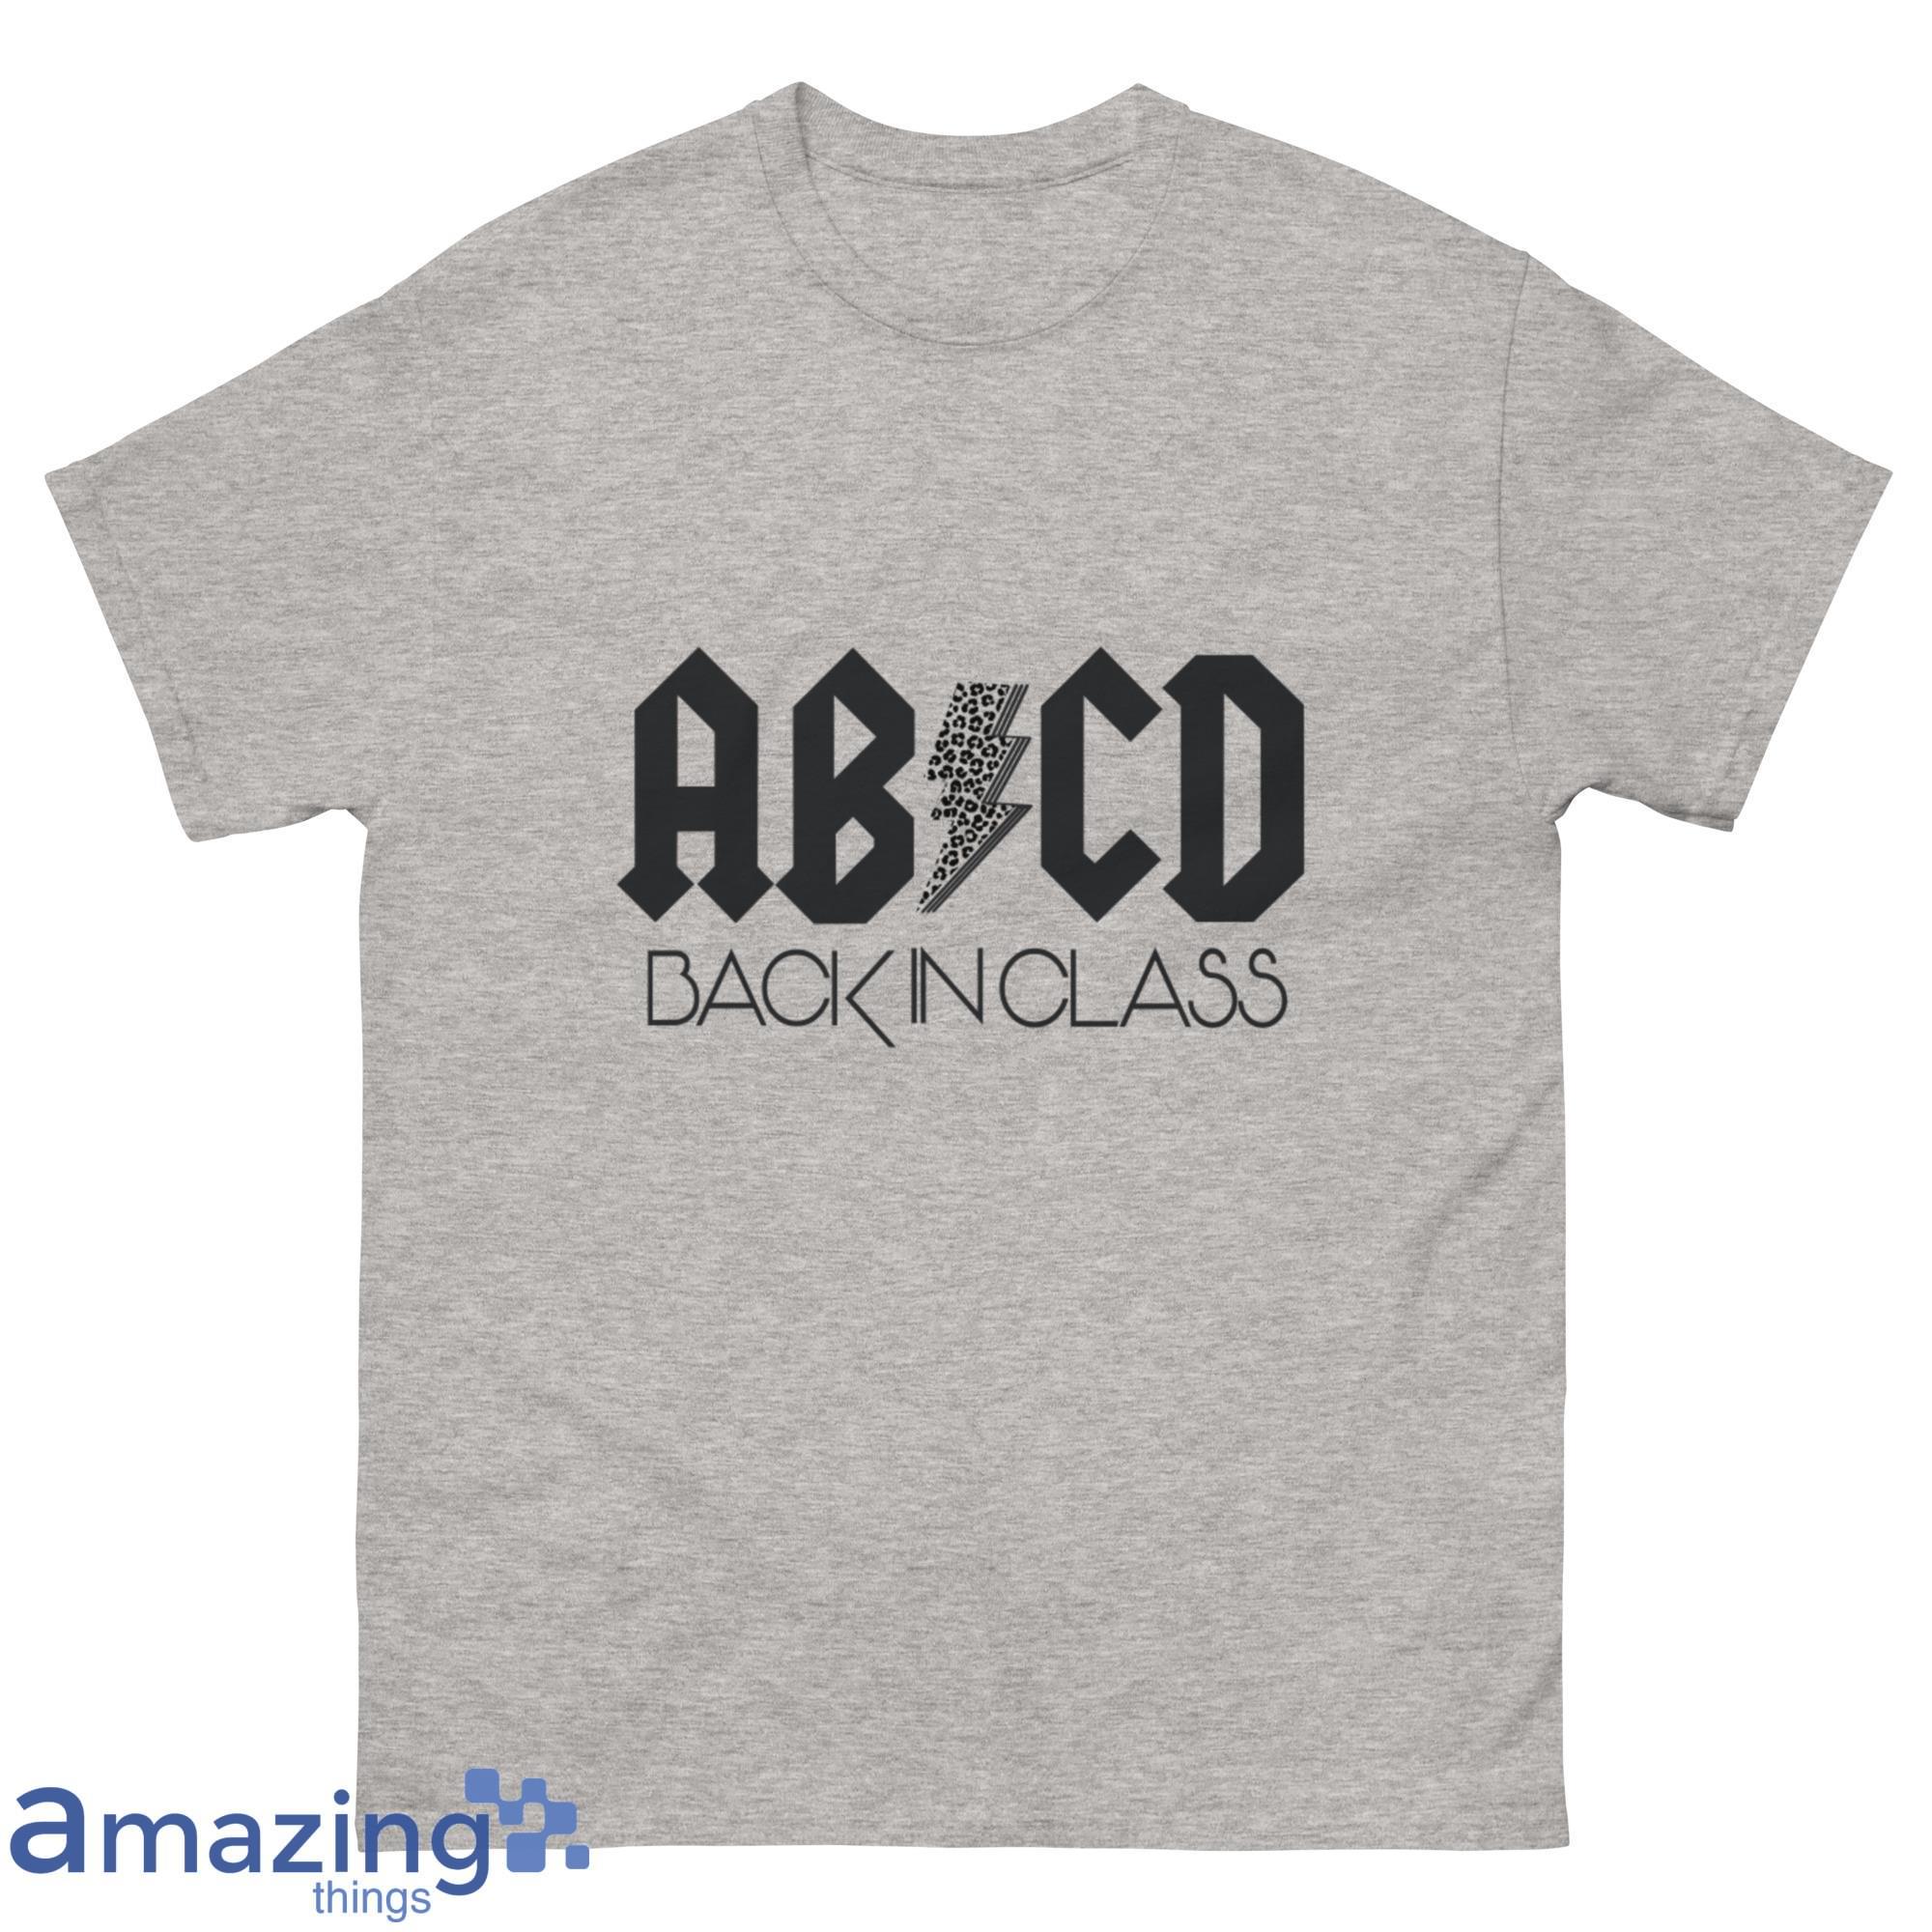 AB CD Backin Class Rock and Roll Parody AC Shirt - G500 Men’s Classic T-Shirt